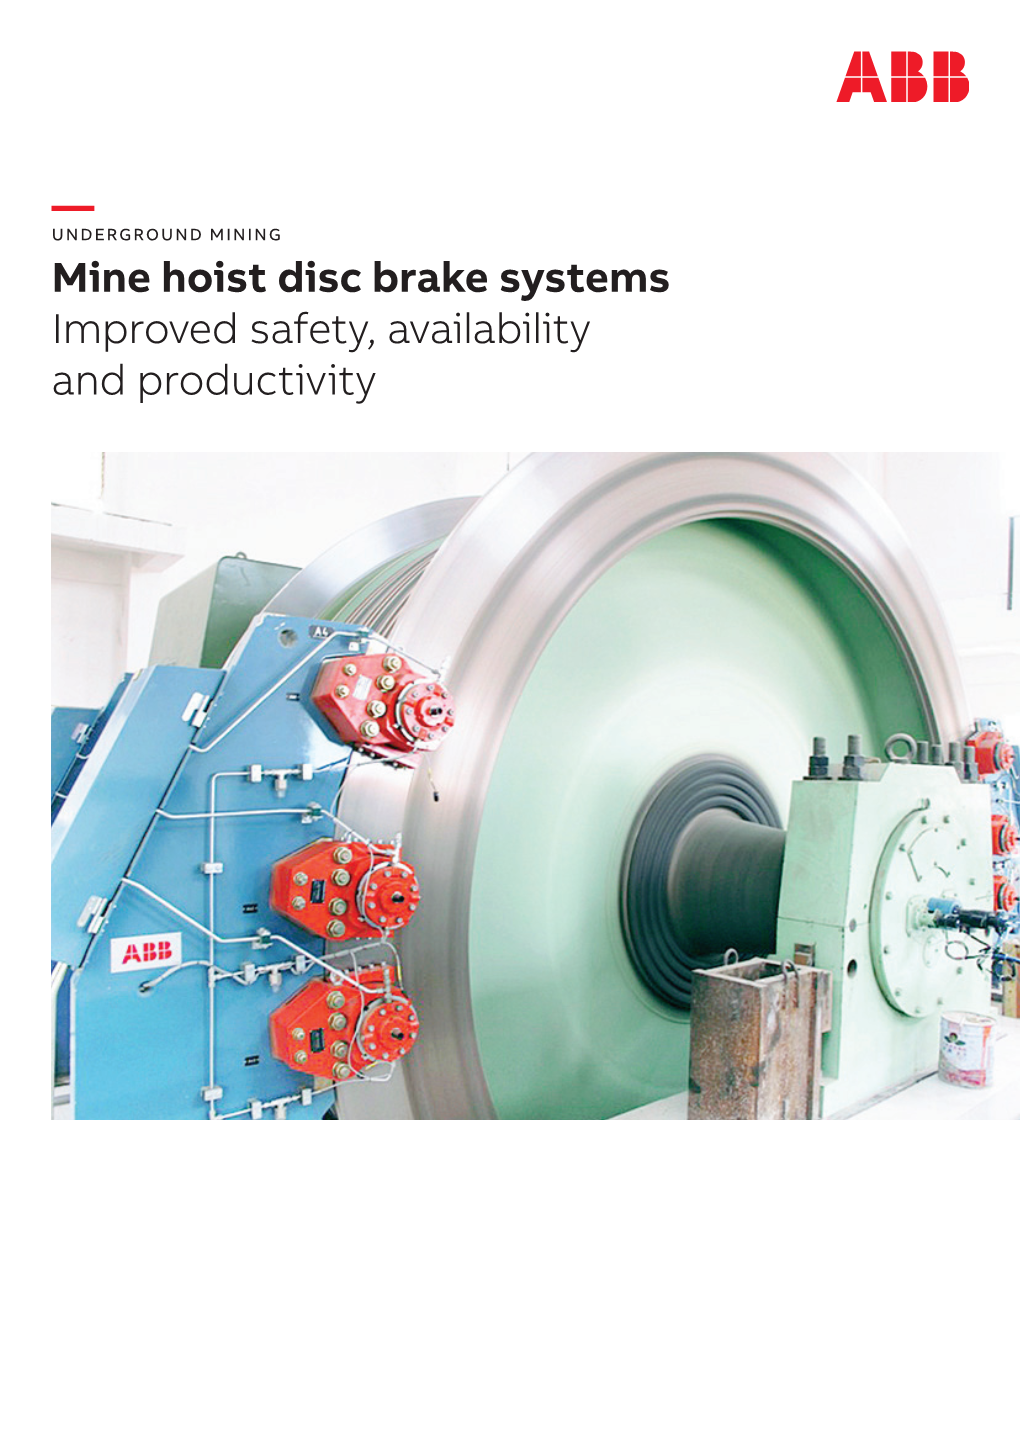 Mine Hoist Disc Brake Systems Improved Safety, Availability and Productivity 2 MINE HOIST DISC BRAKE SYSTEMS IMPROVED SAFETY, AVAILABILITY and PRODUCTIVITY